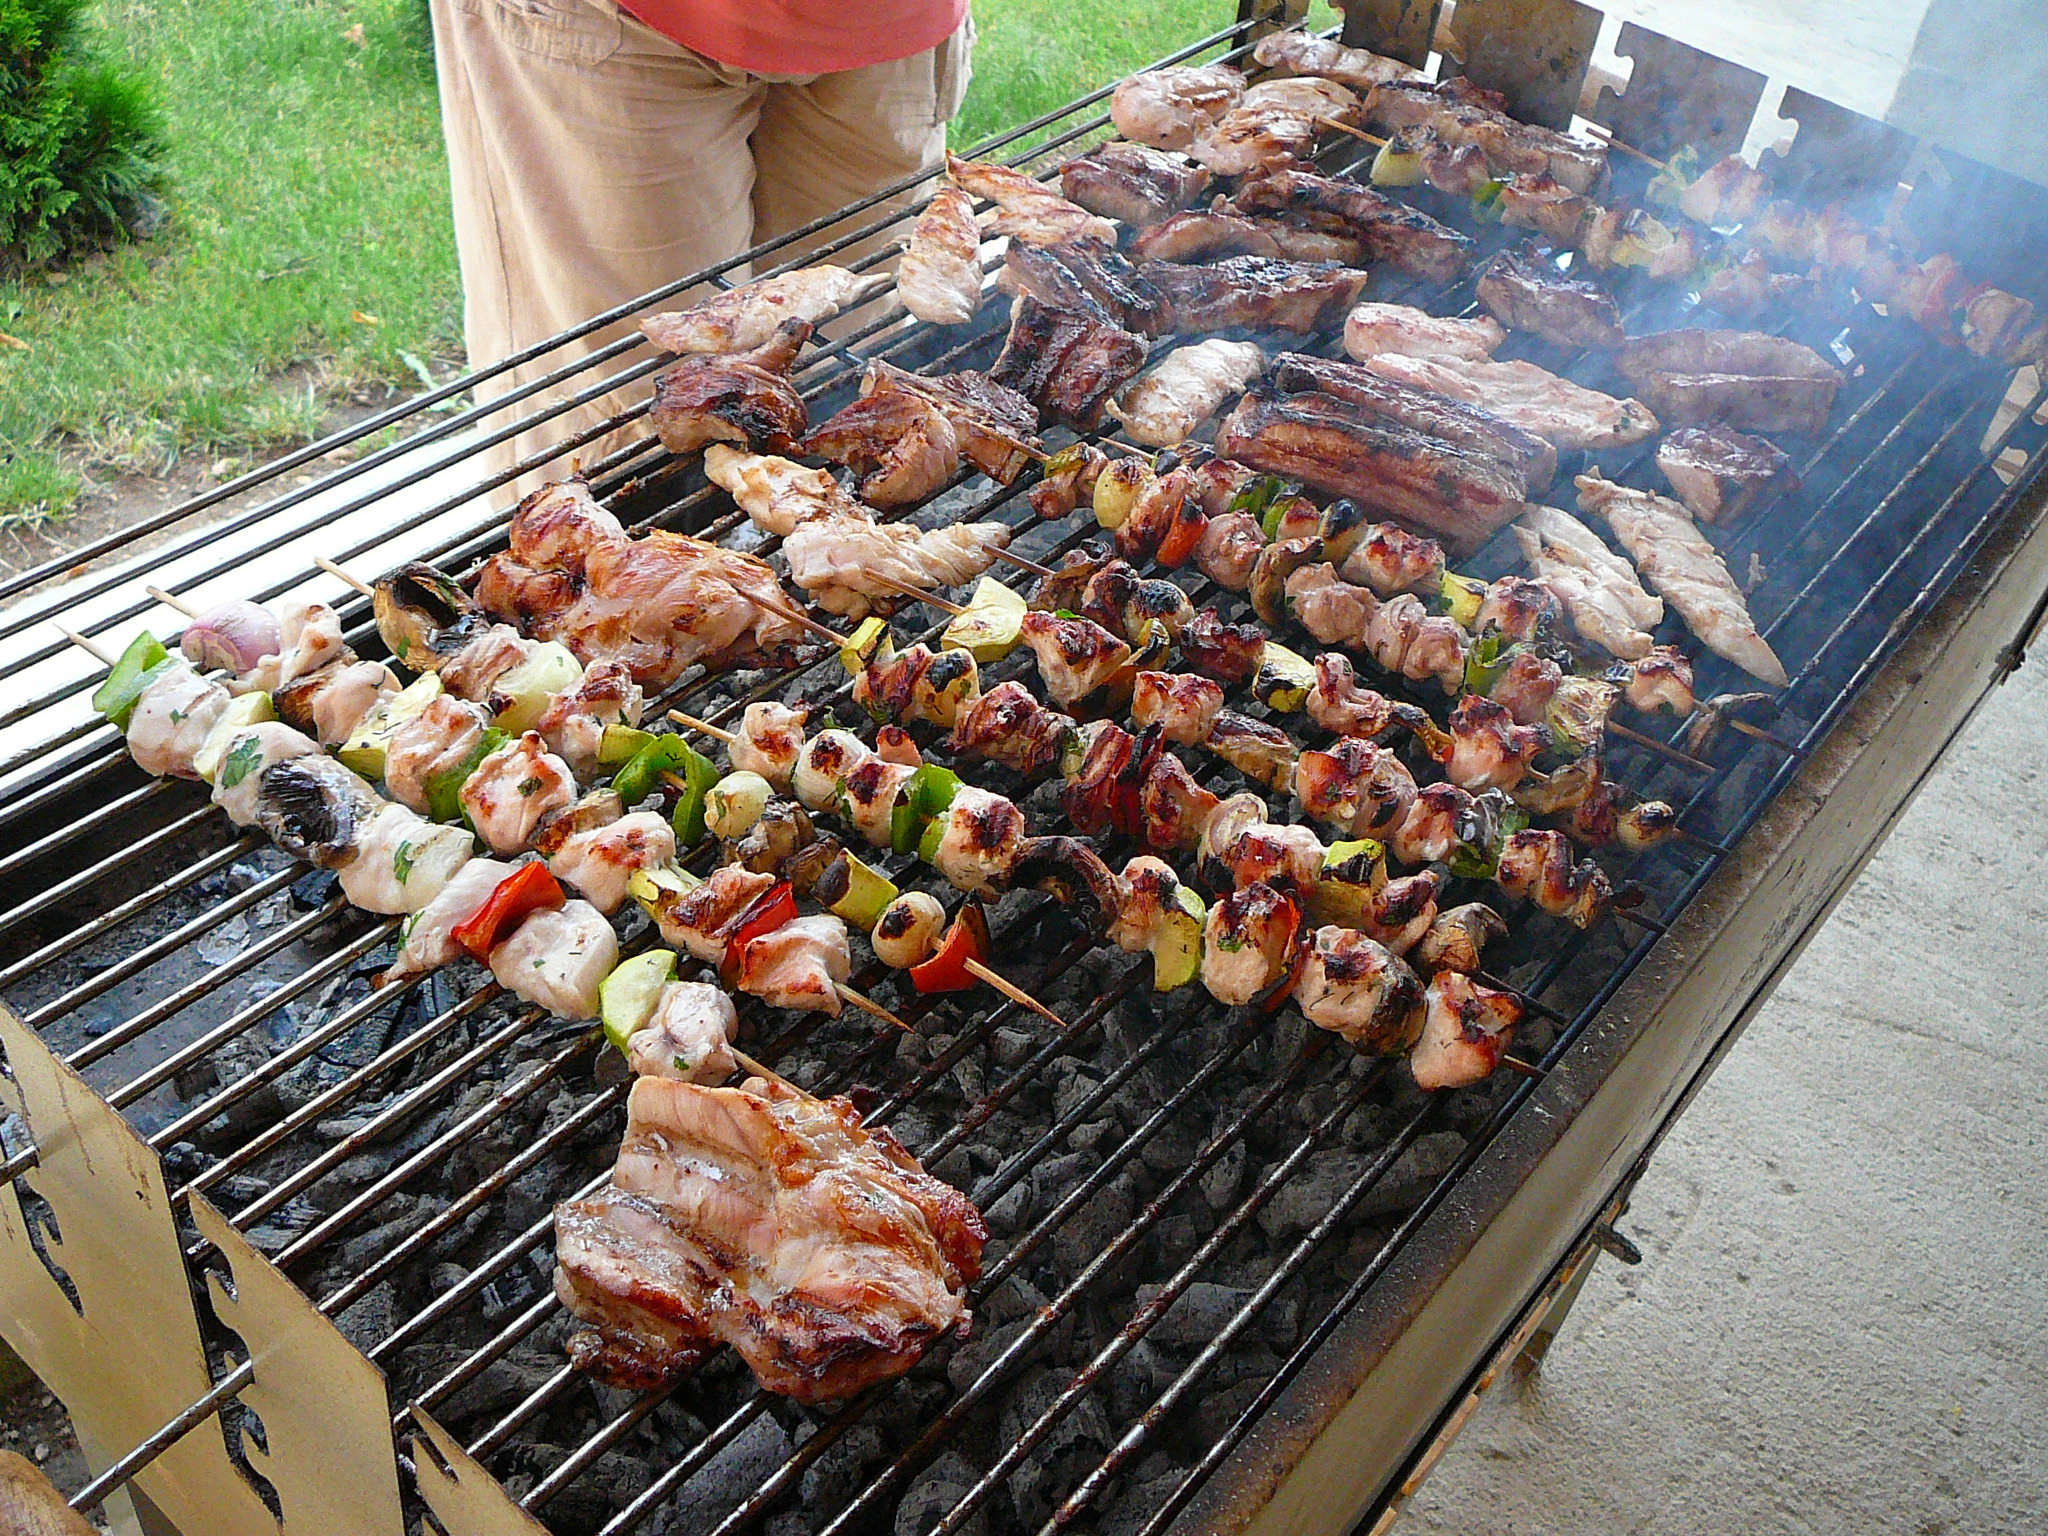 File:Bulgarian barbecue E1.jpg - Wikimedia Commons